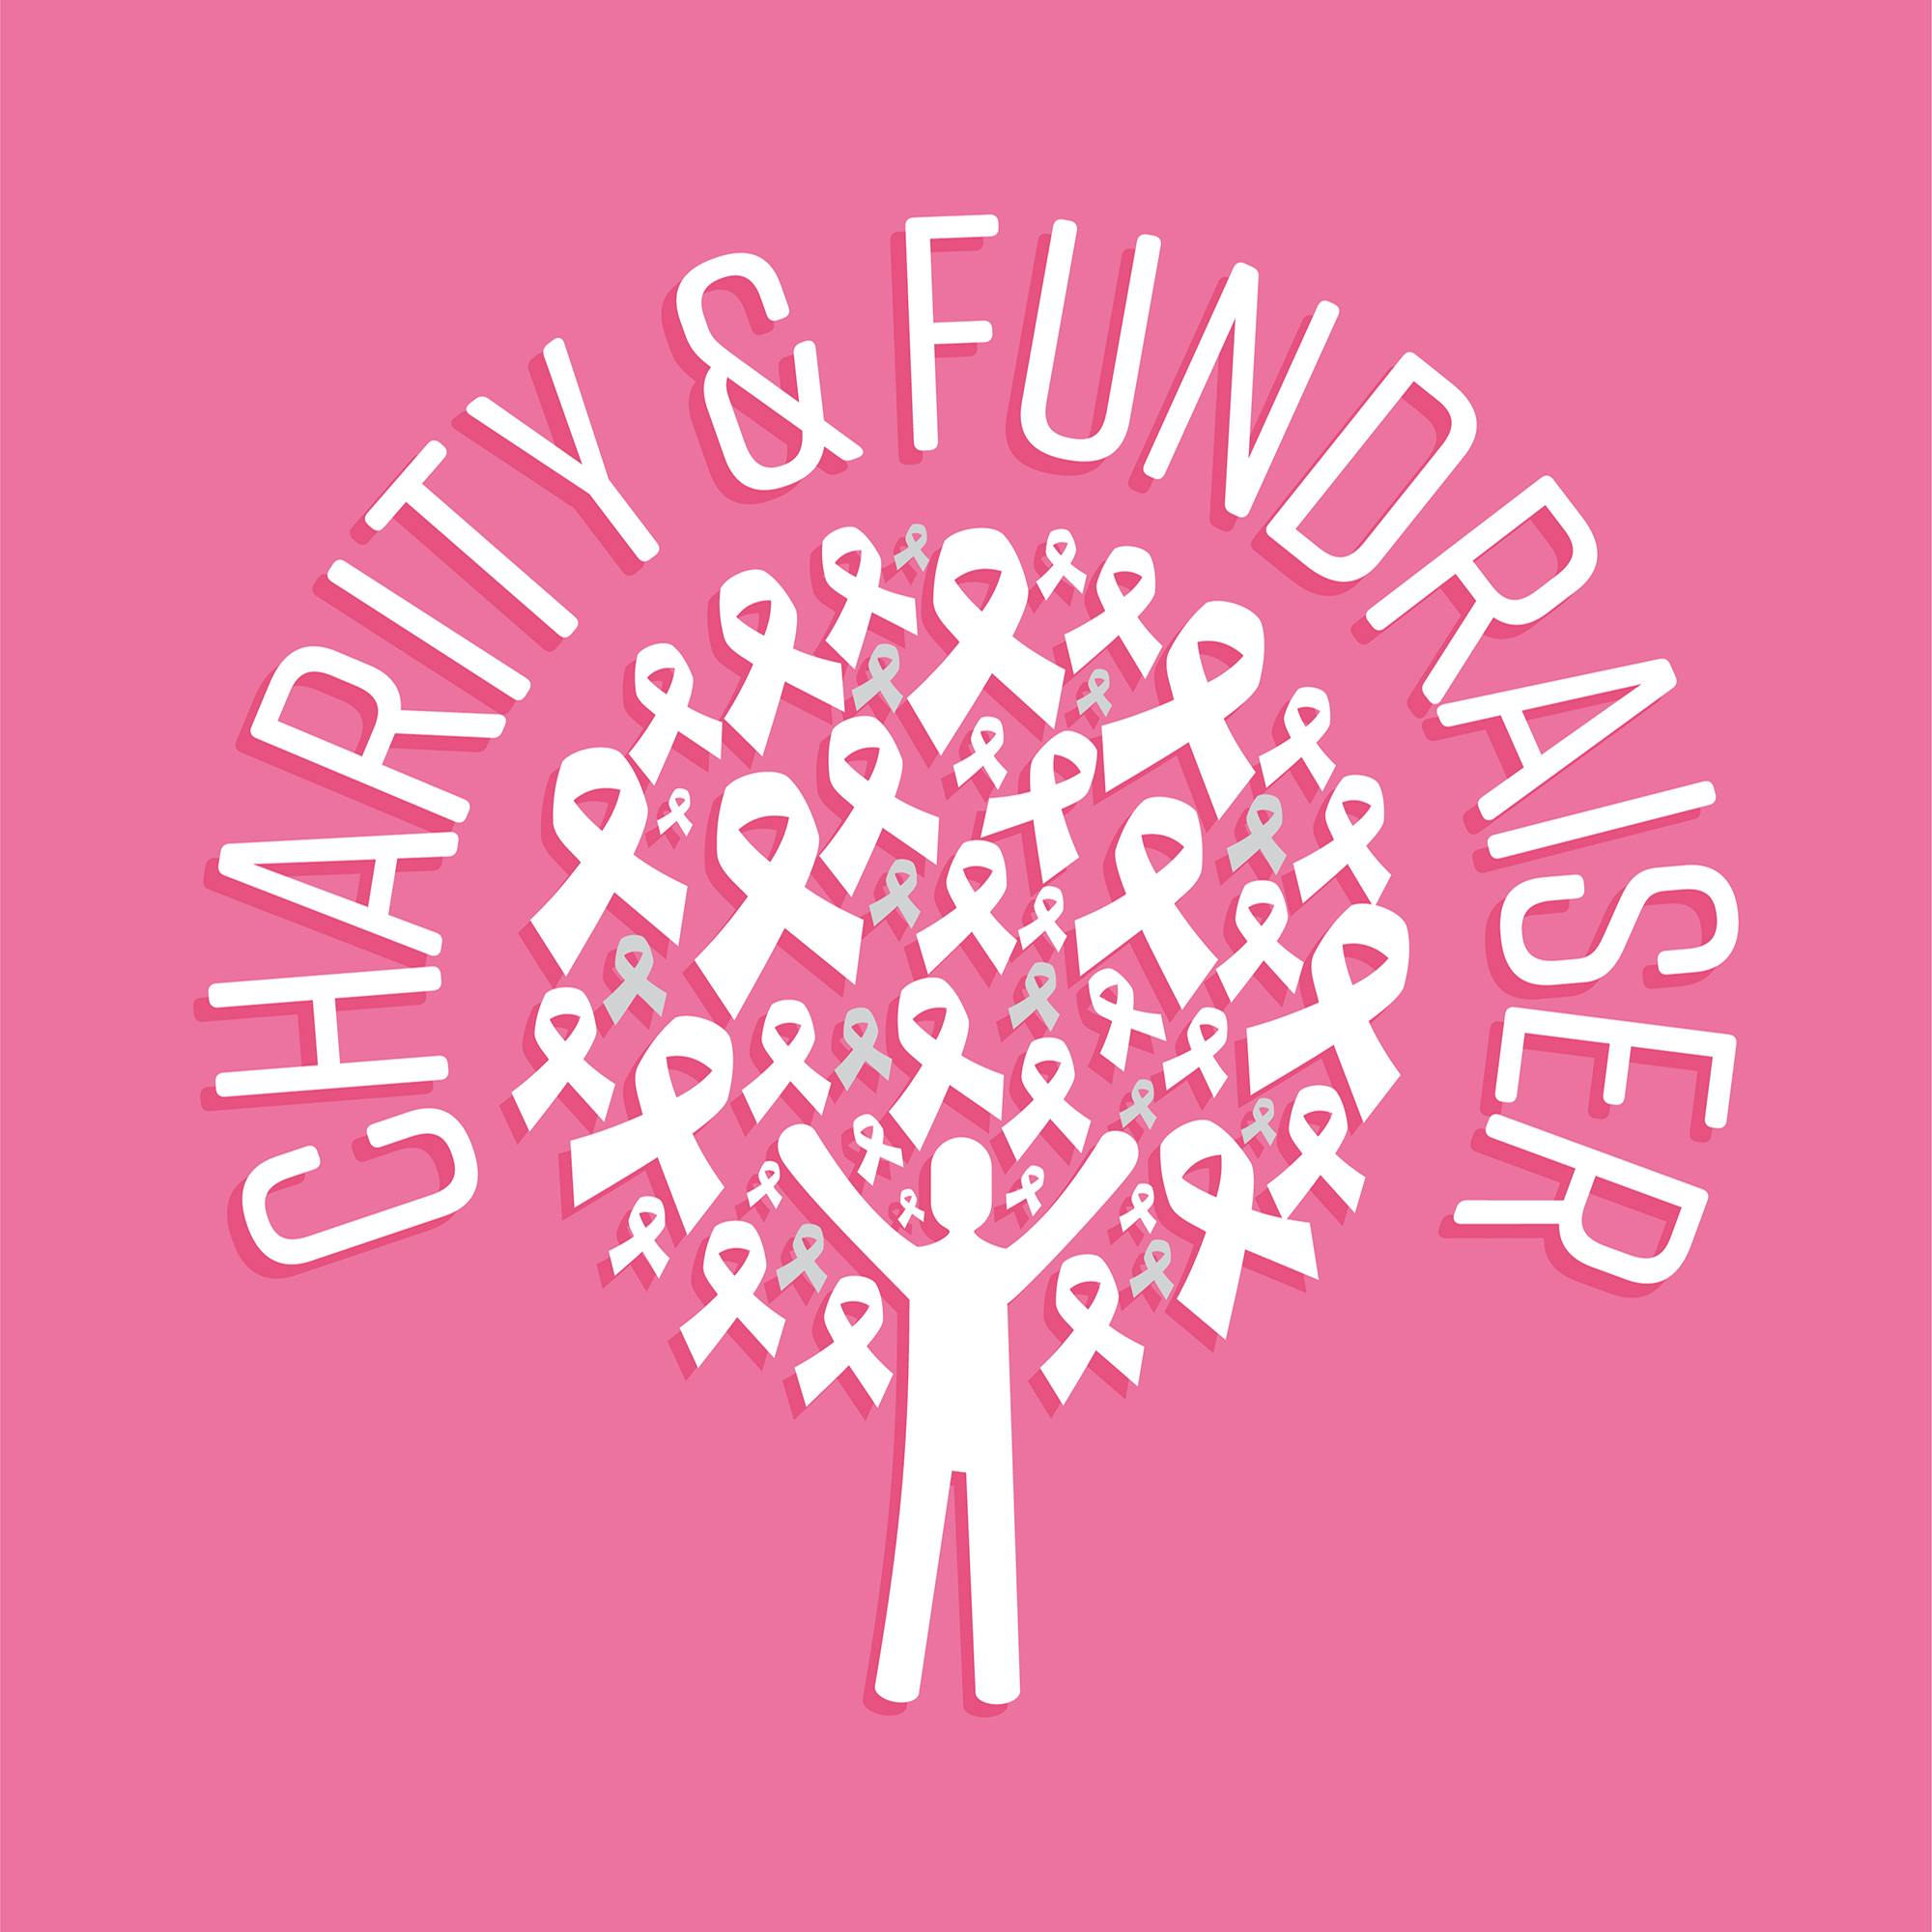 Charities & Fundraisers